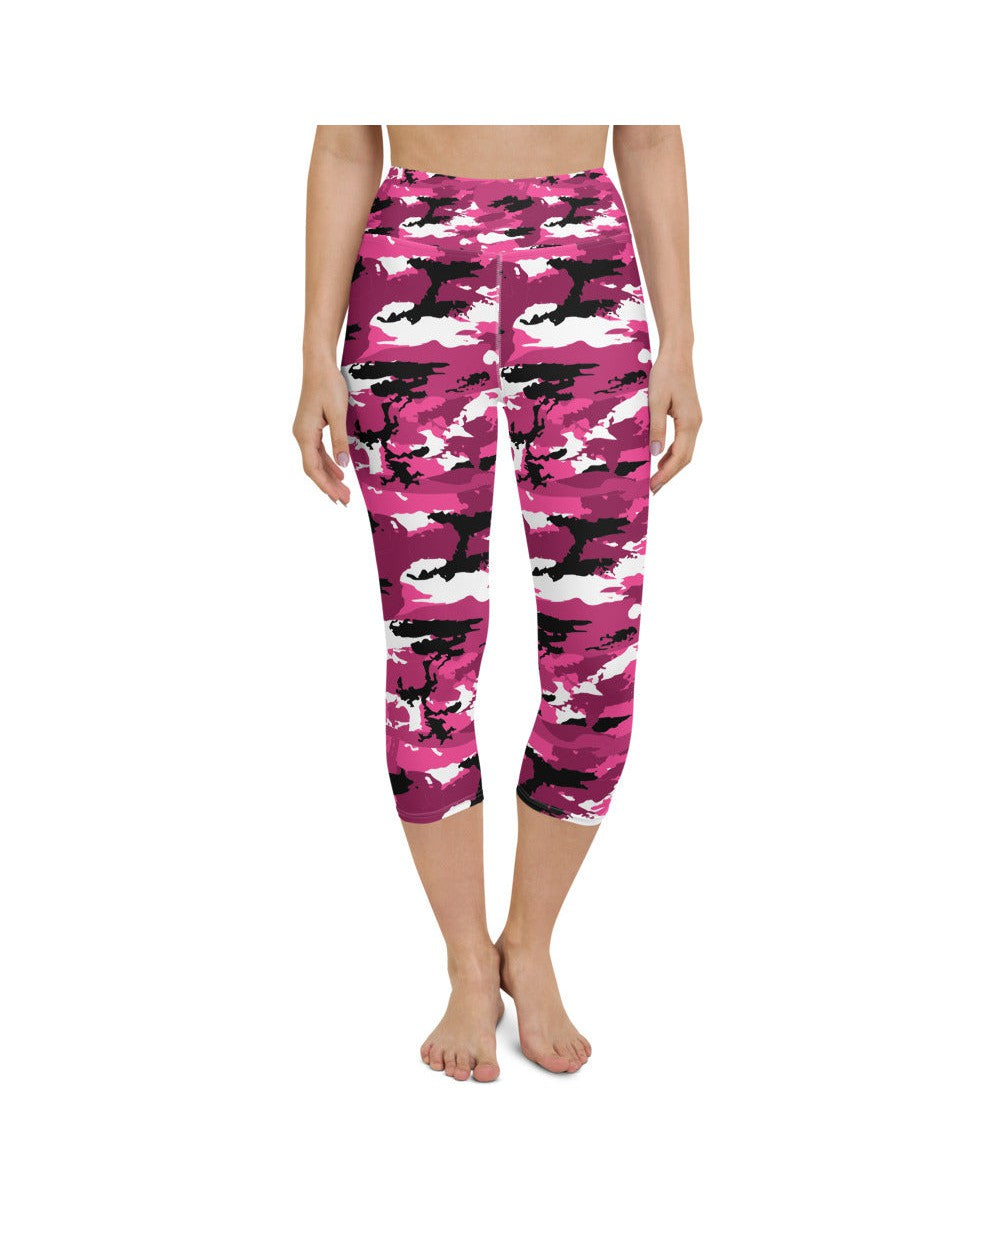 Womens Yoga Capris Pink Camo Black/White/Pink